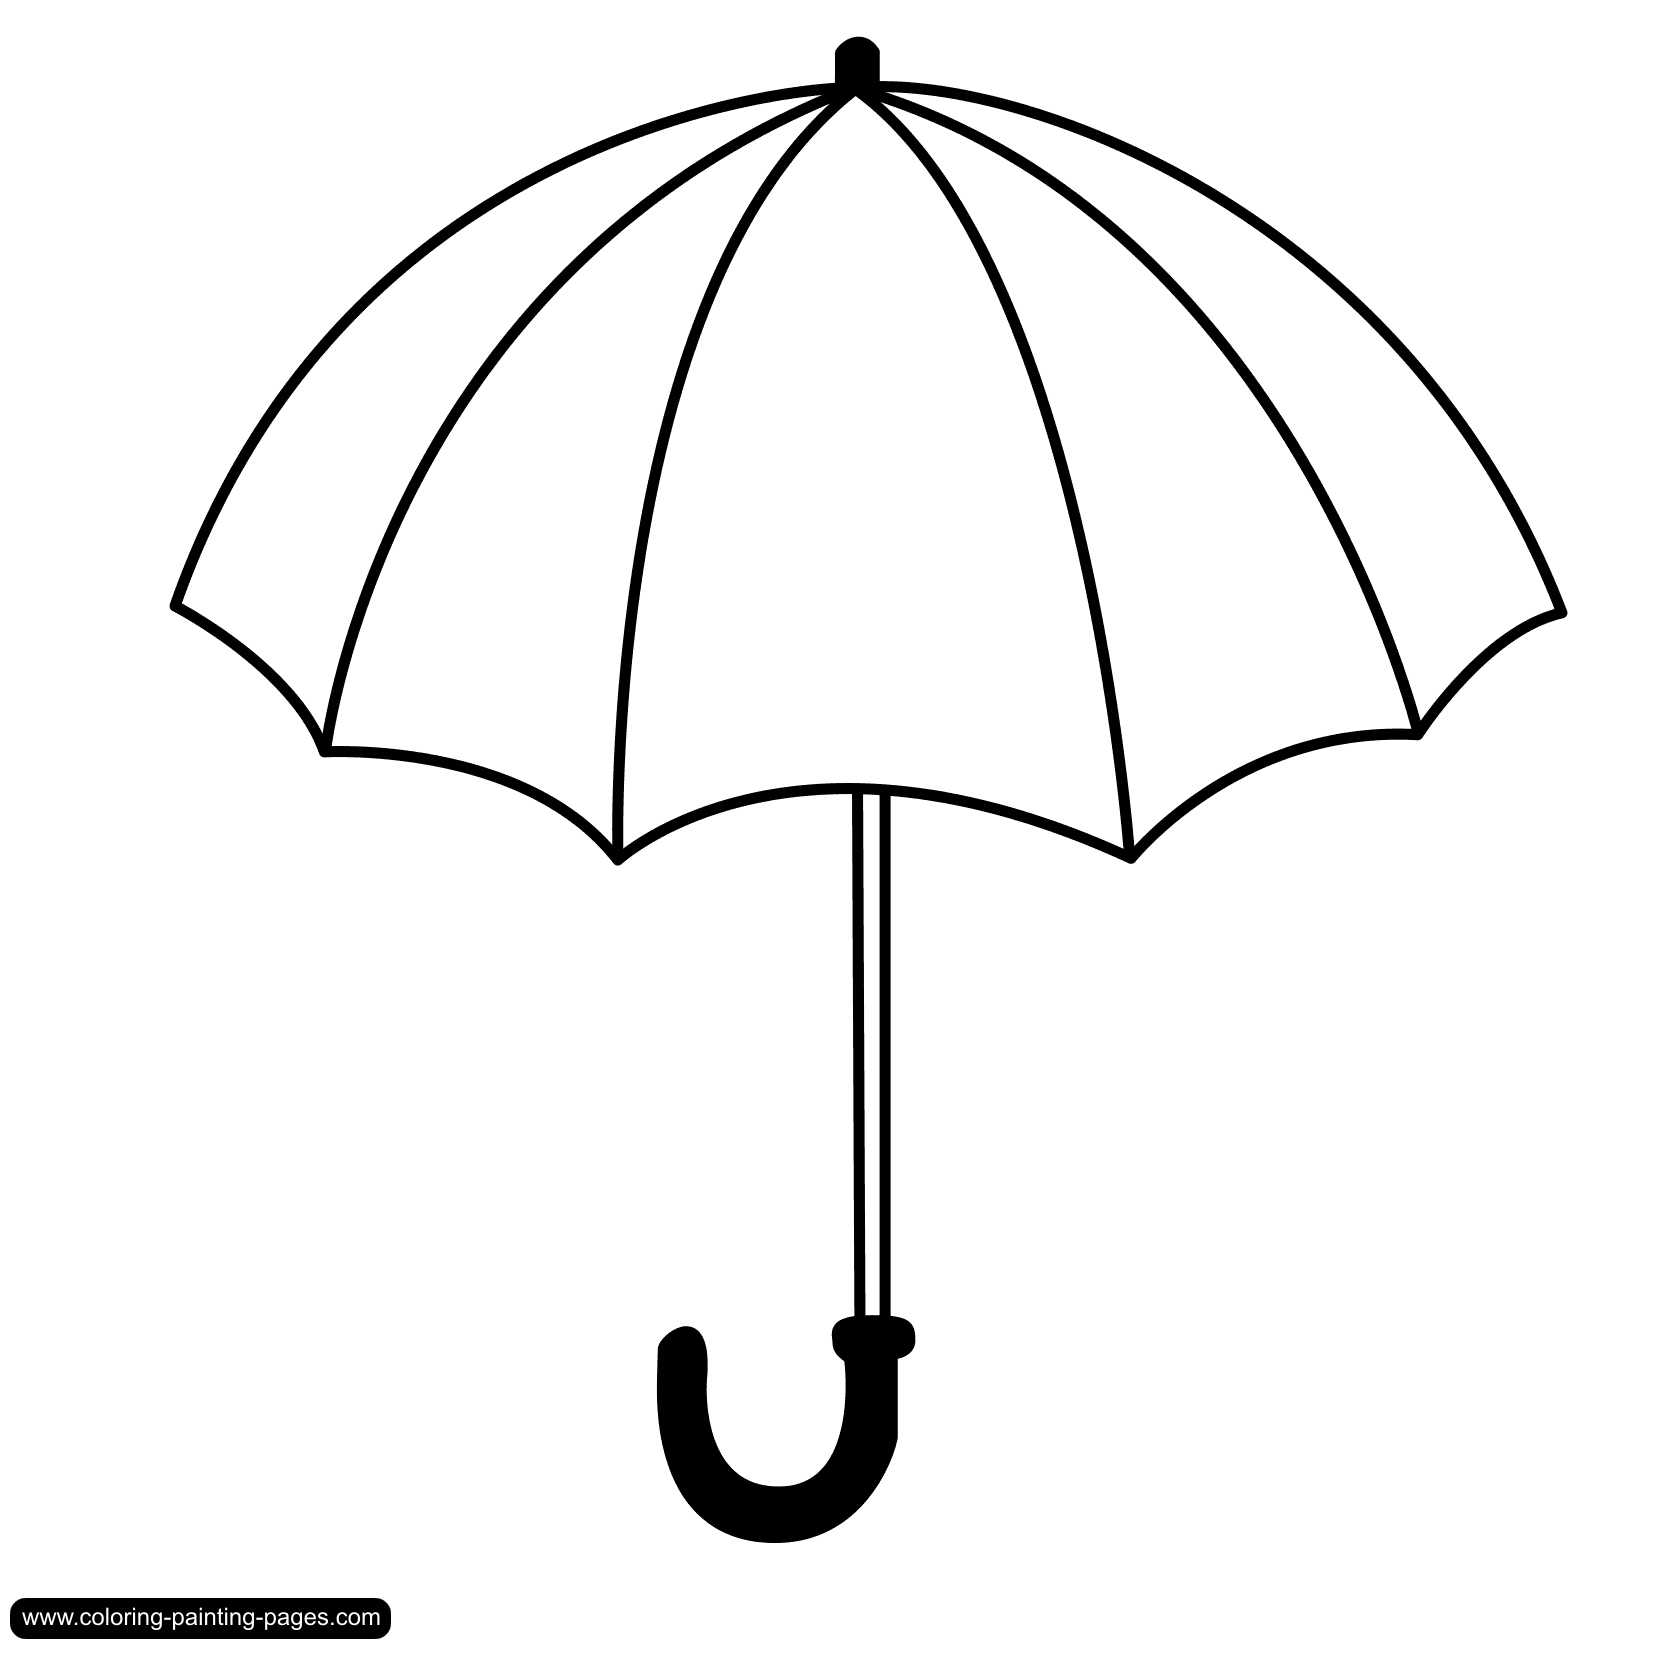 Free Umbrella, Download Free Clip Art, Free Clip Art on ...